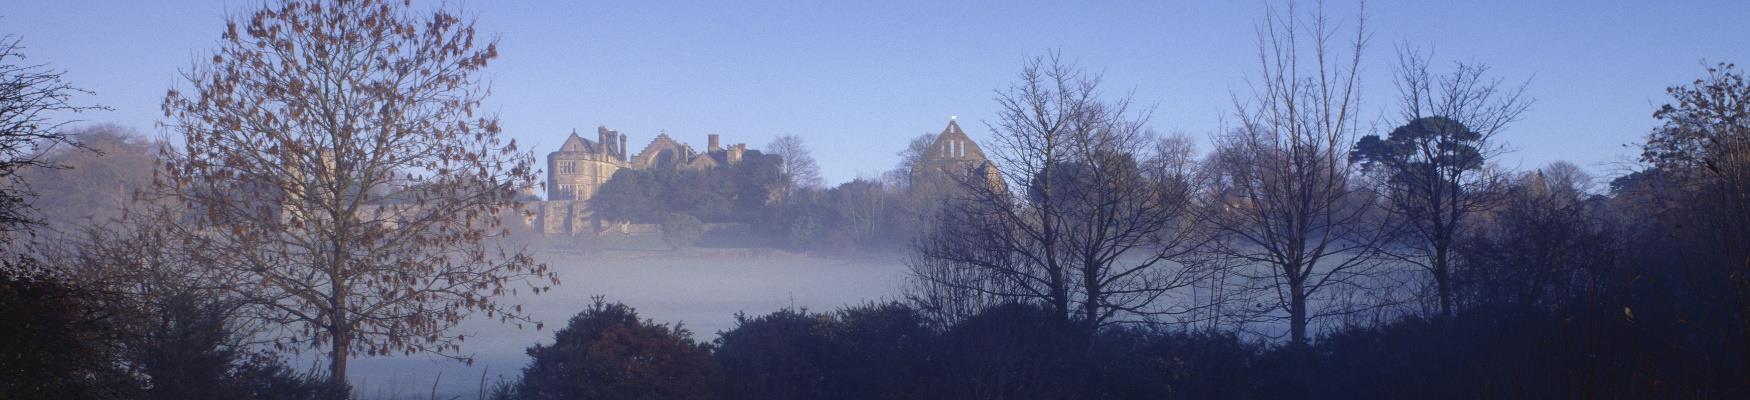 Battle Abbey in the early morning mist